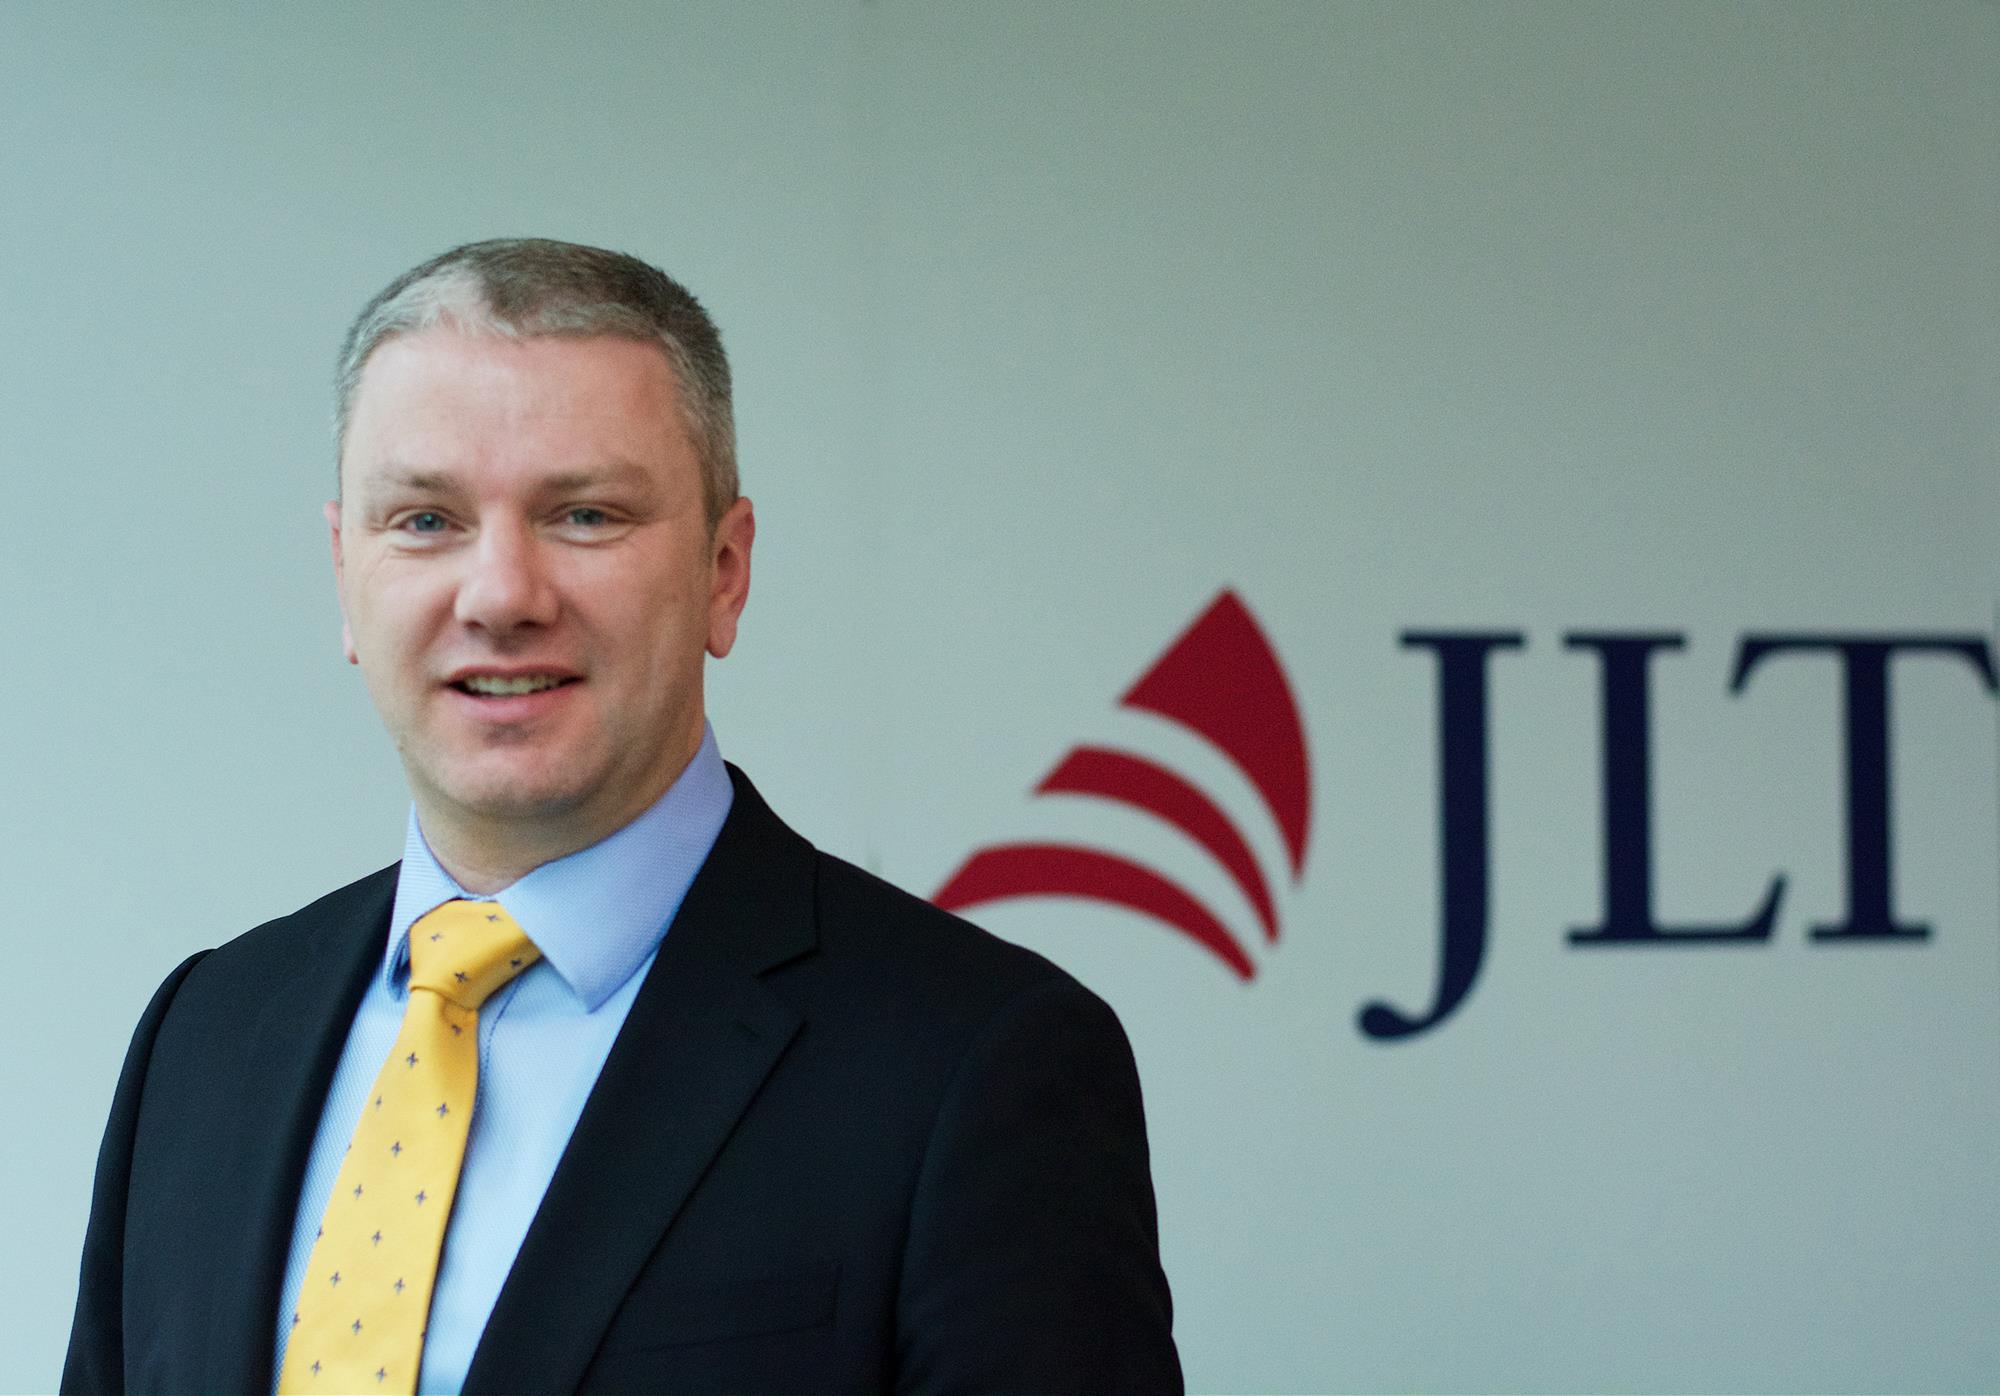 JLT Specialty names Steve Fox as Midlands sales chief